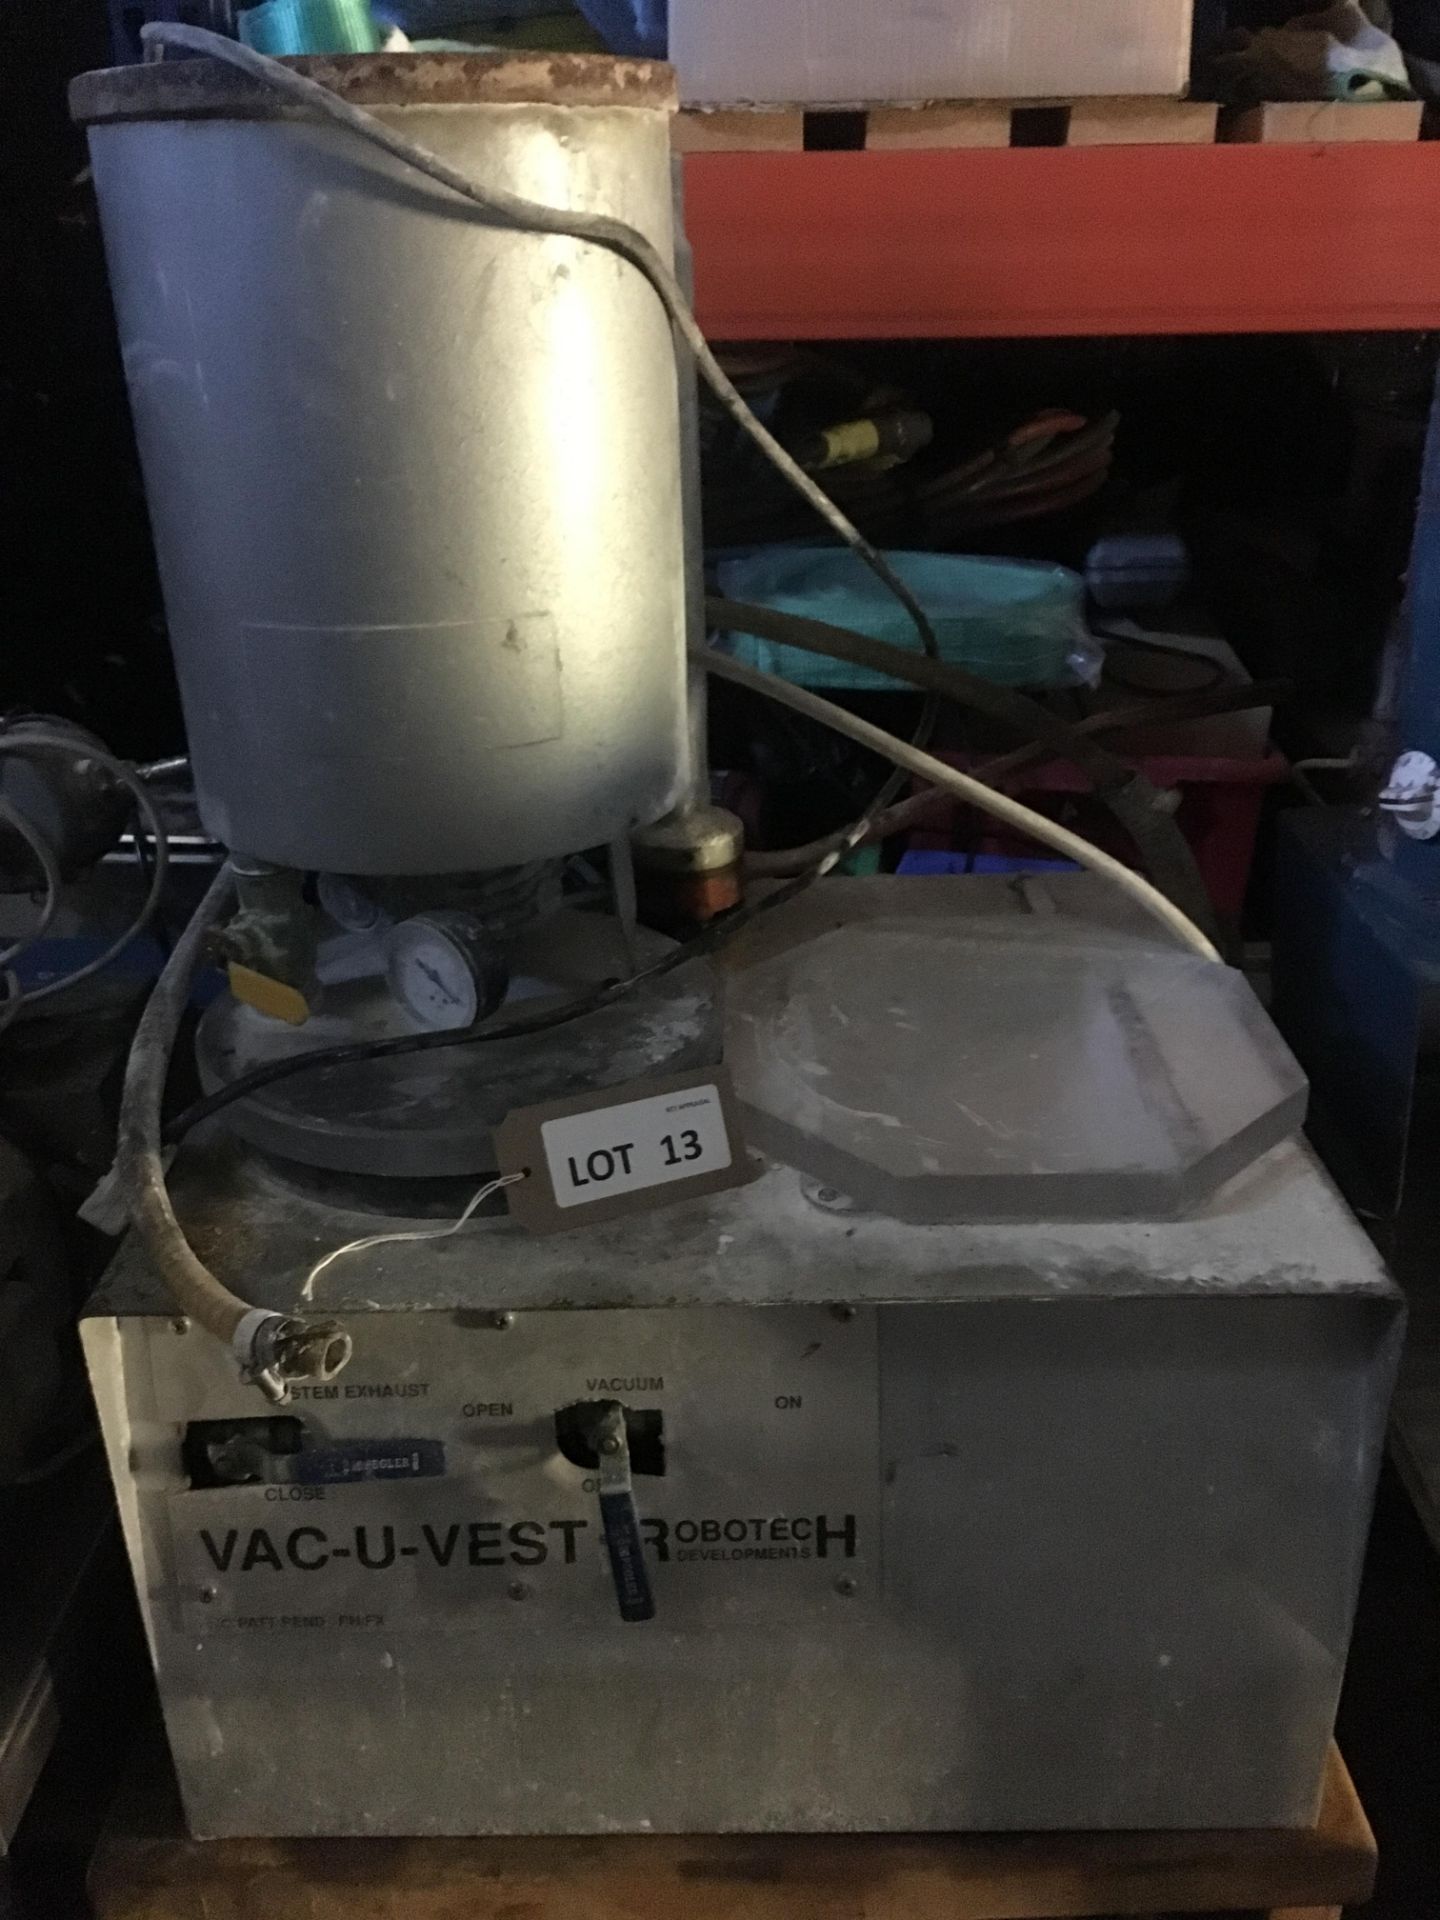 Robotech Vac-U-Vest platinum investing machine, serial no: not accessible, with vacuum pump